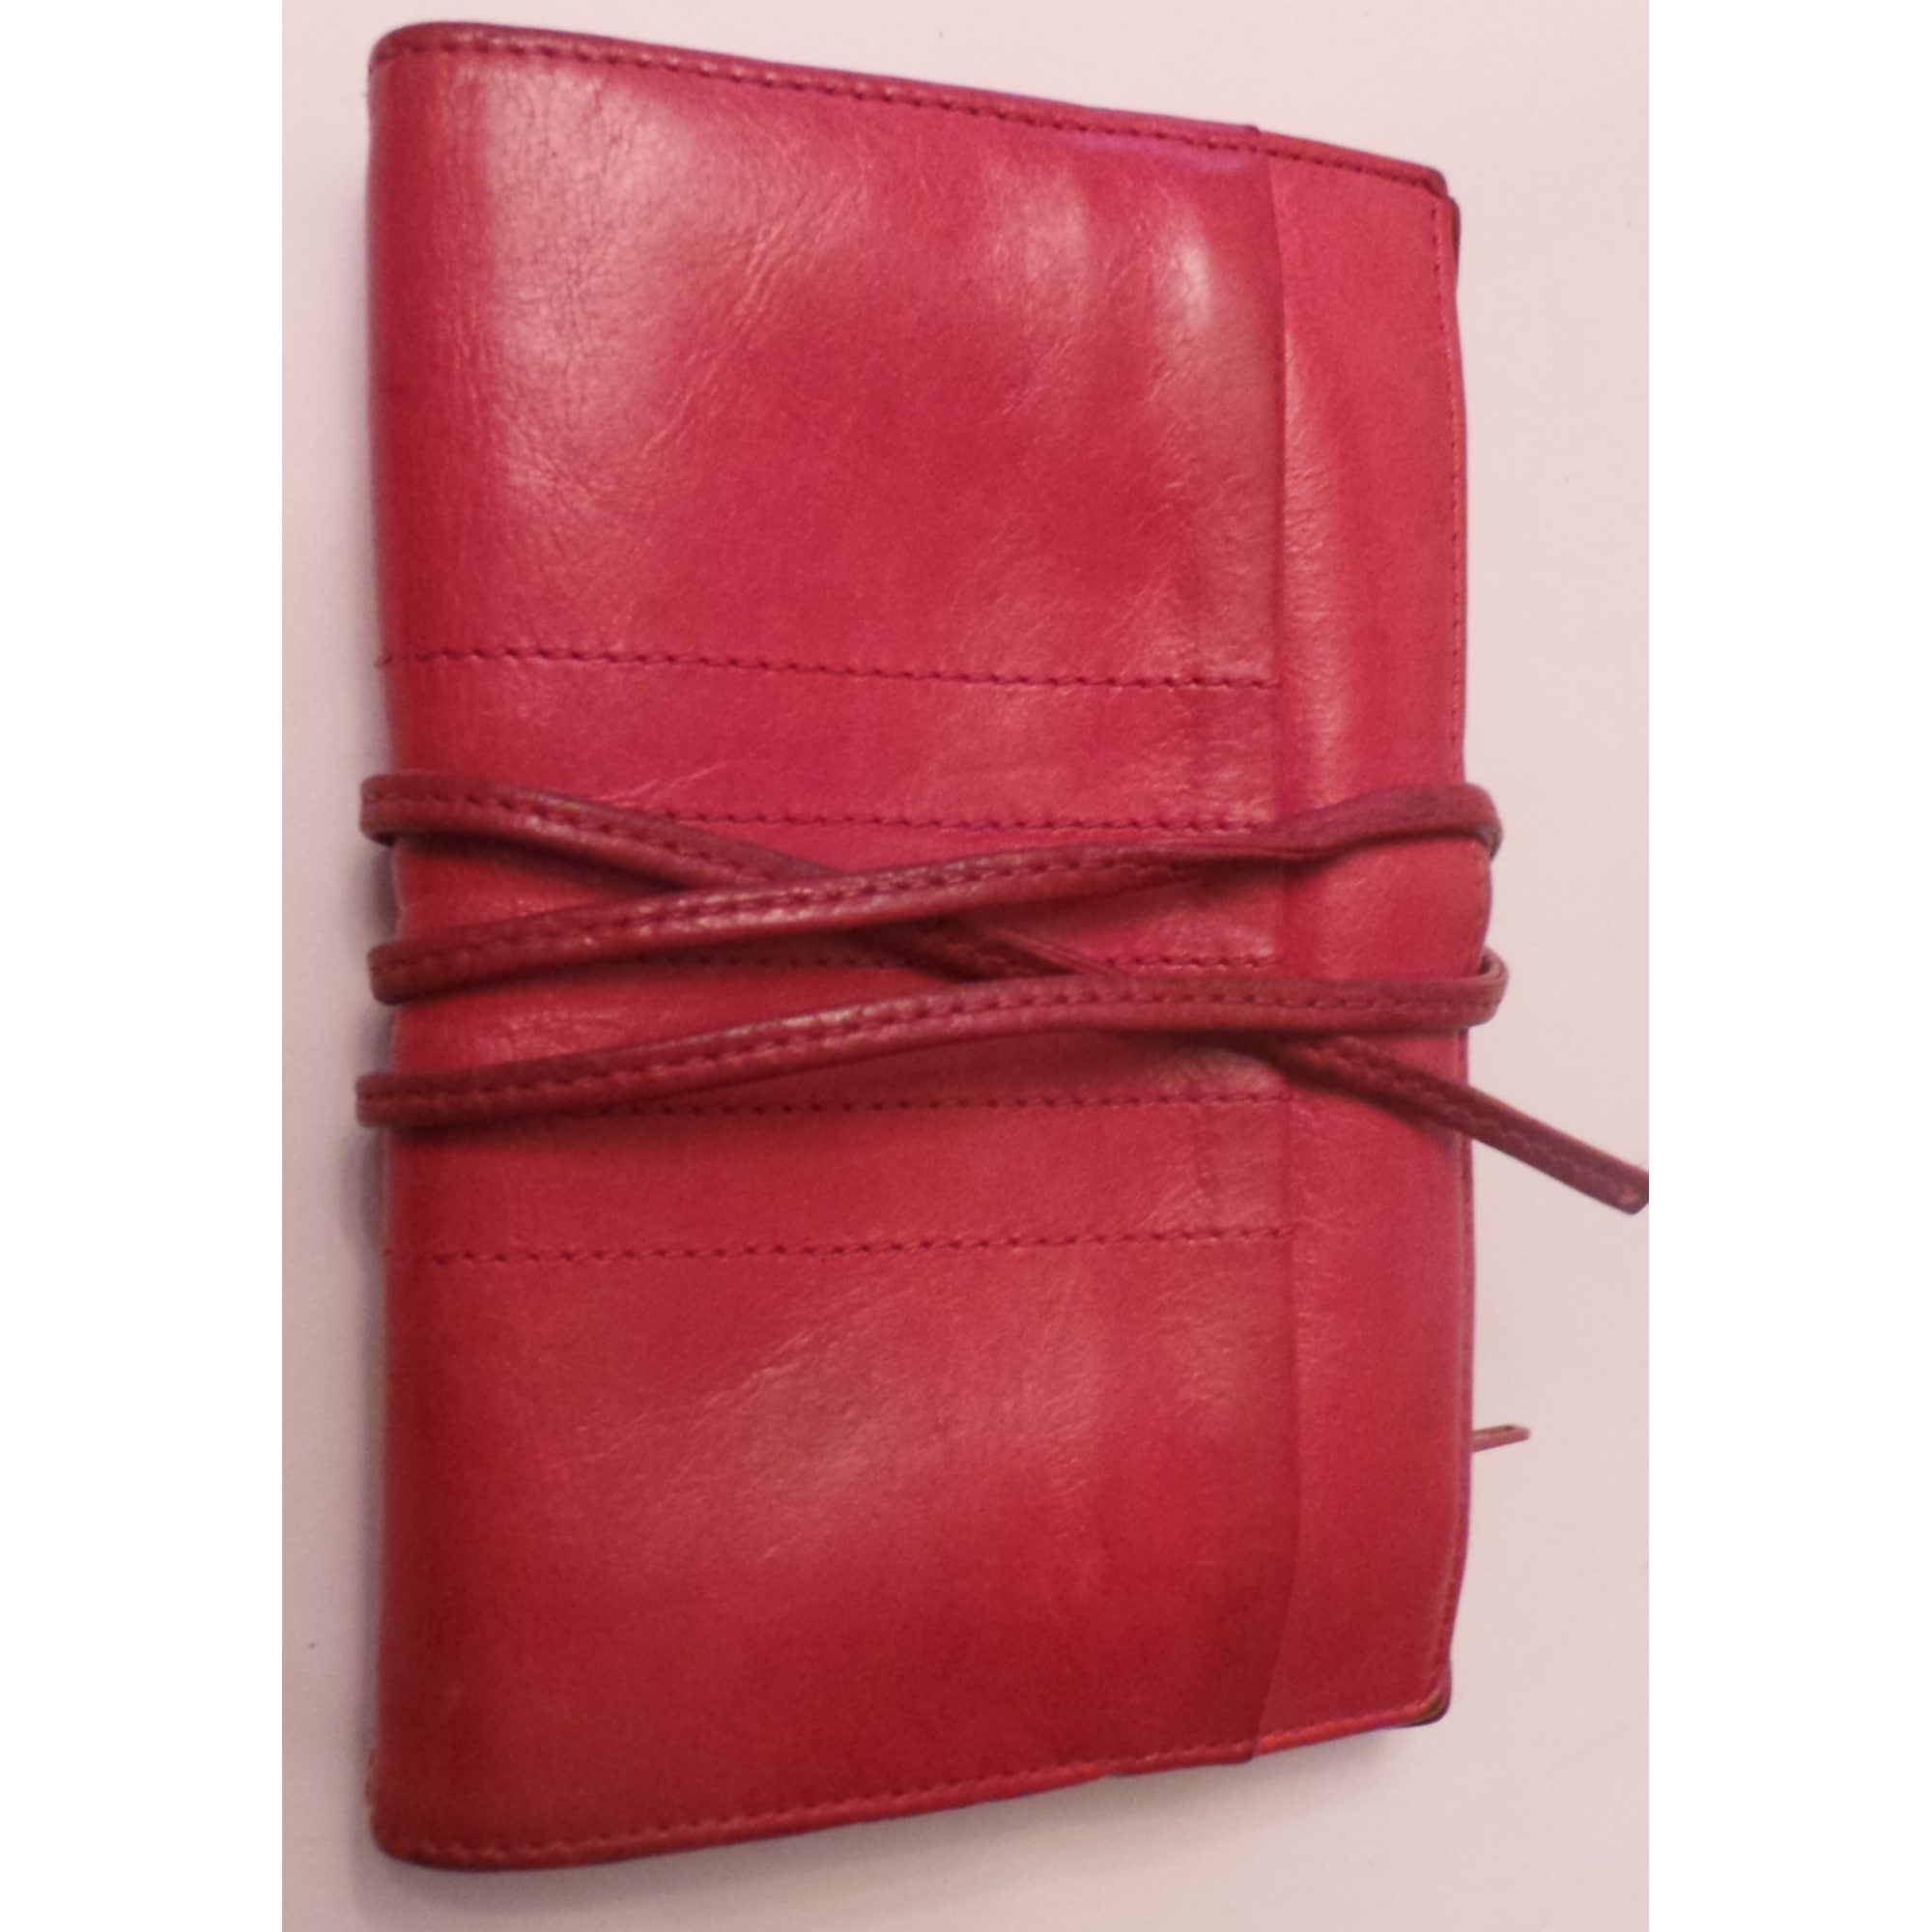 Portefeuille BRONTIBAY rouge vendu par Destockdress - 5382588